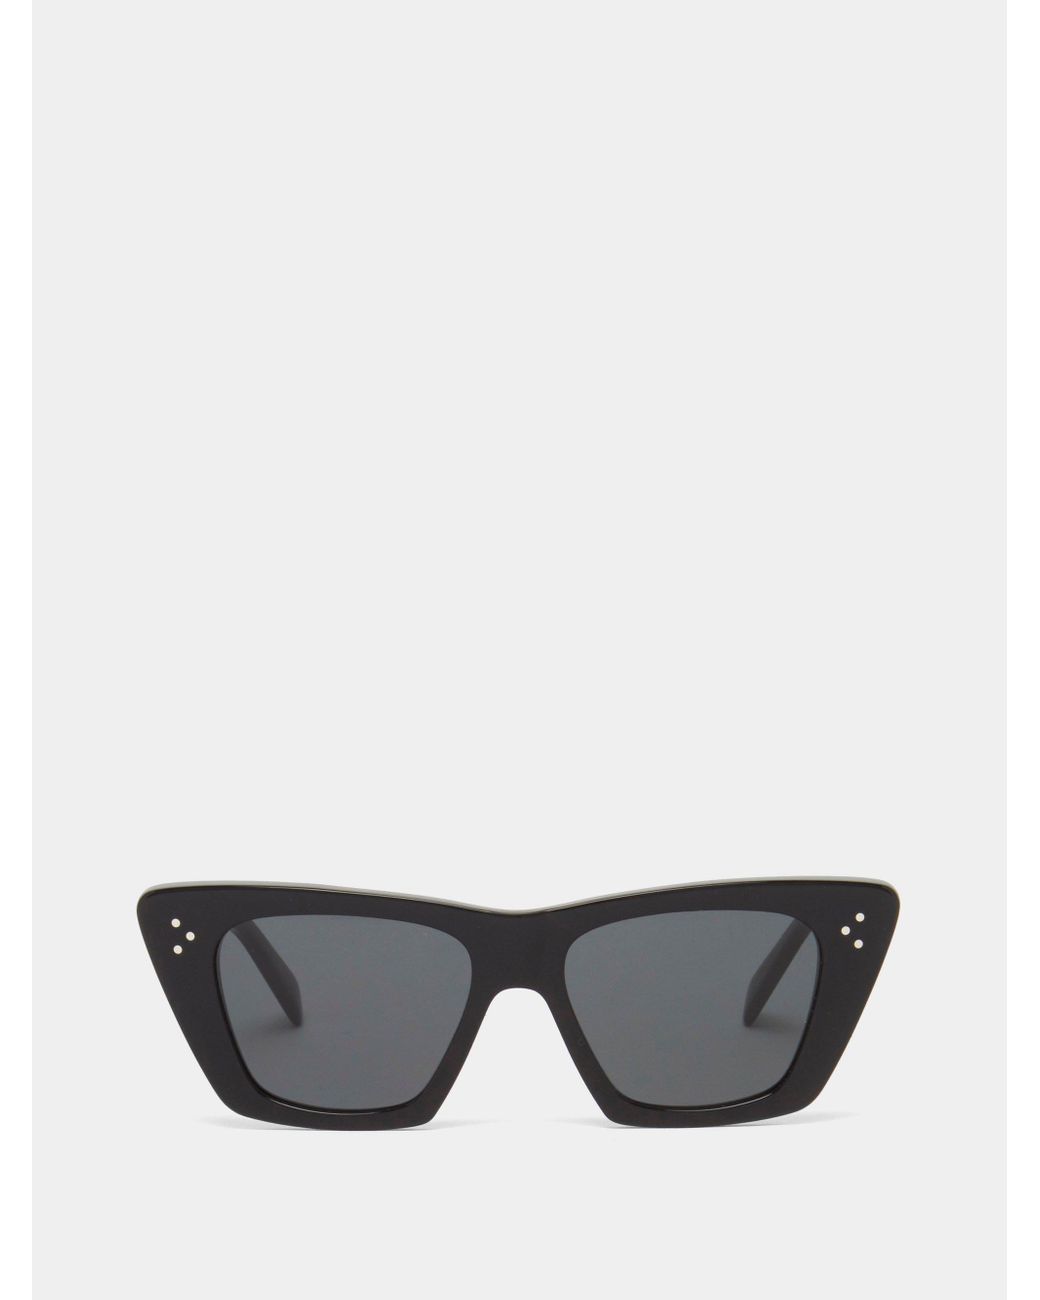 Celine Cat-eye Acetate Sunglasses in Gray | Lyst